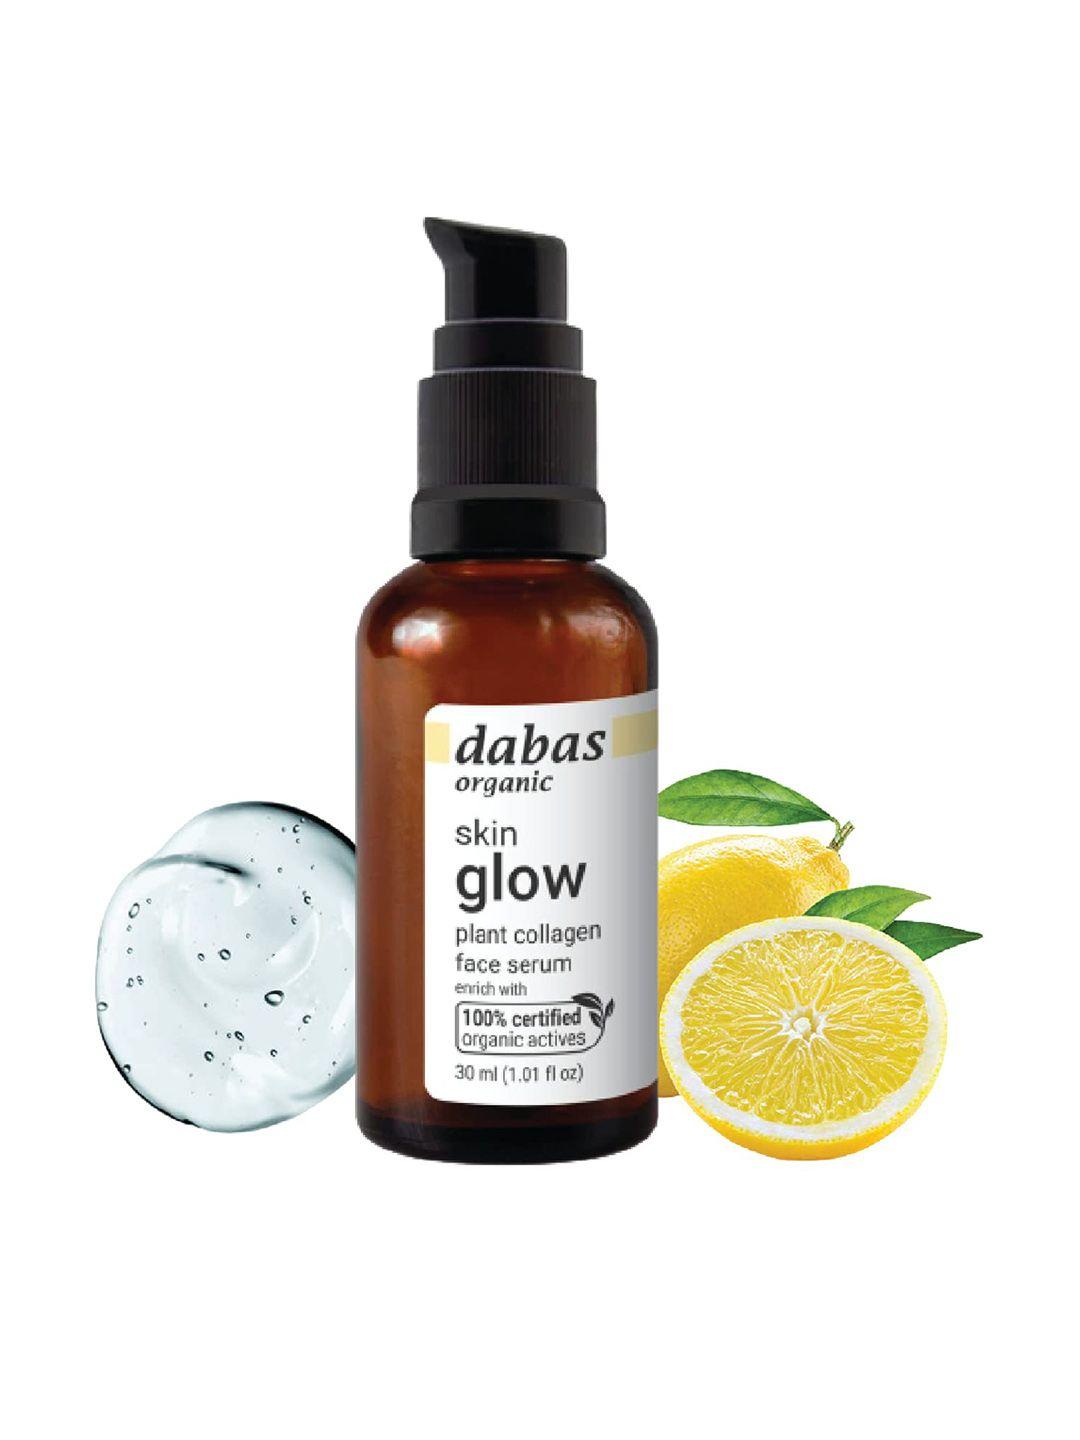 dabas organic skin glow plant collagen face serum with organic active - 30 ml